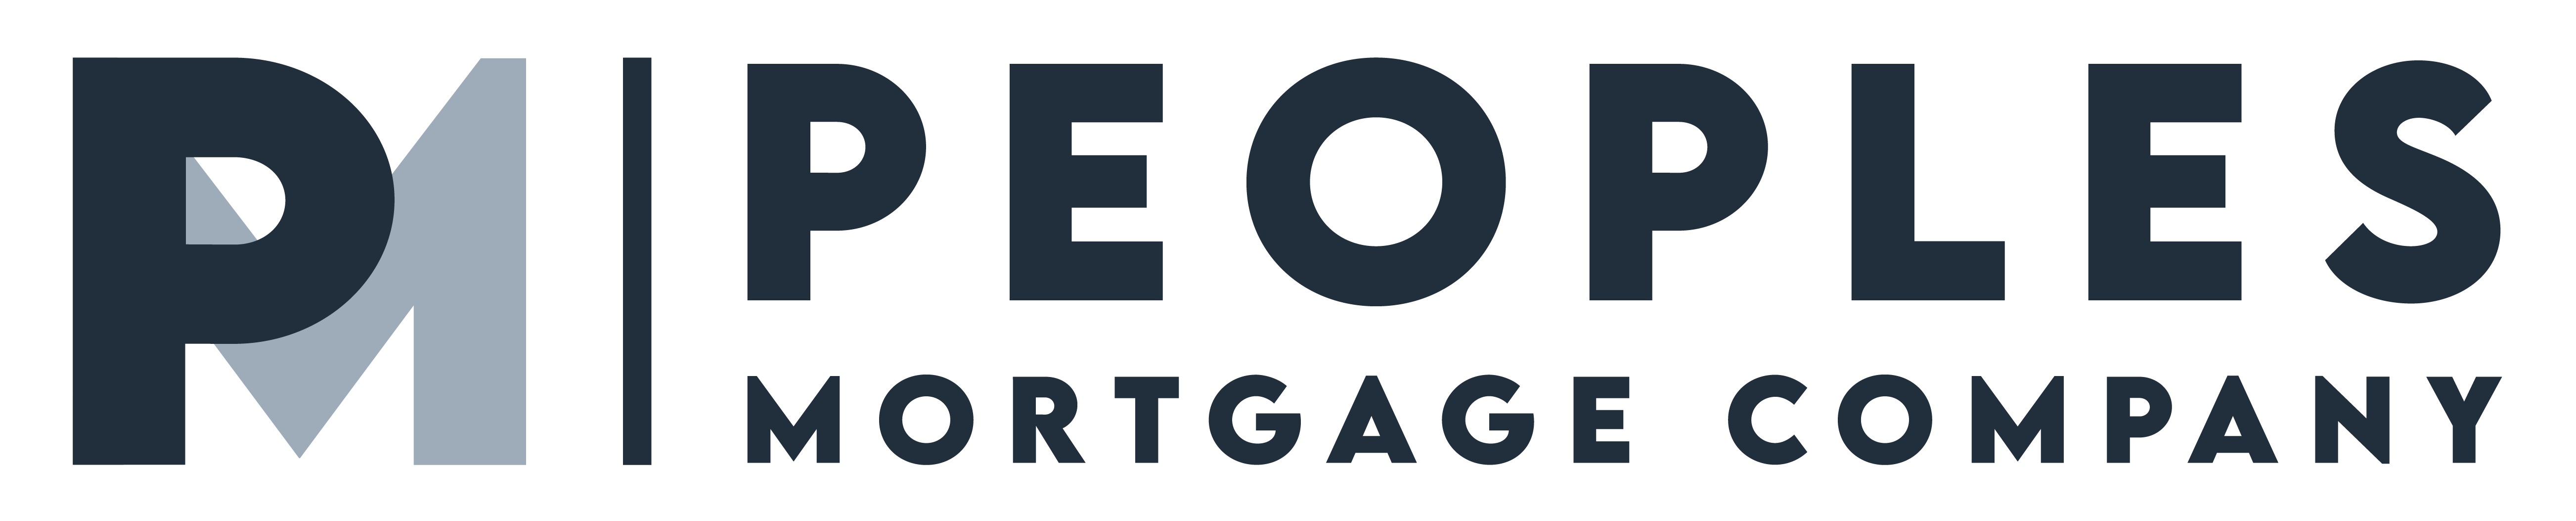 people's mortgage company logo